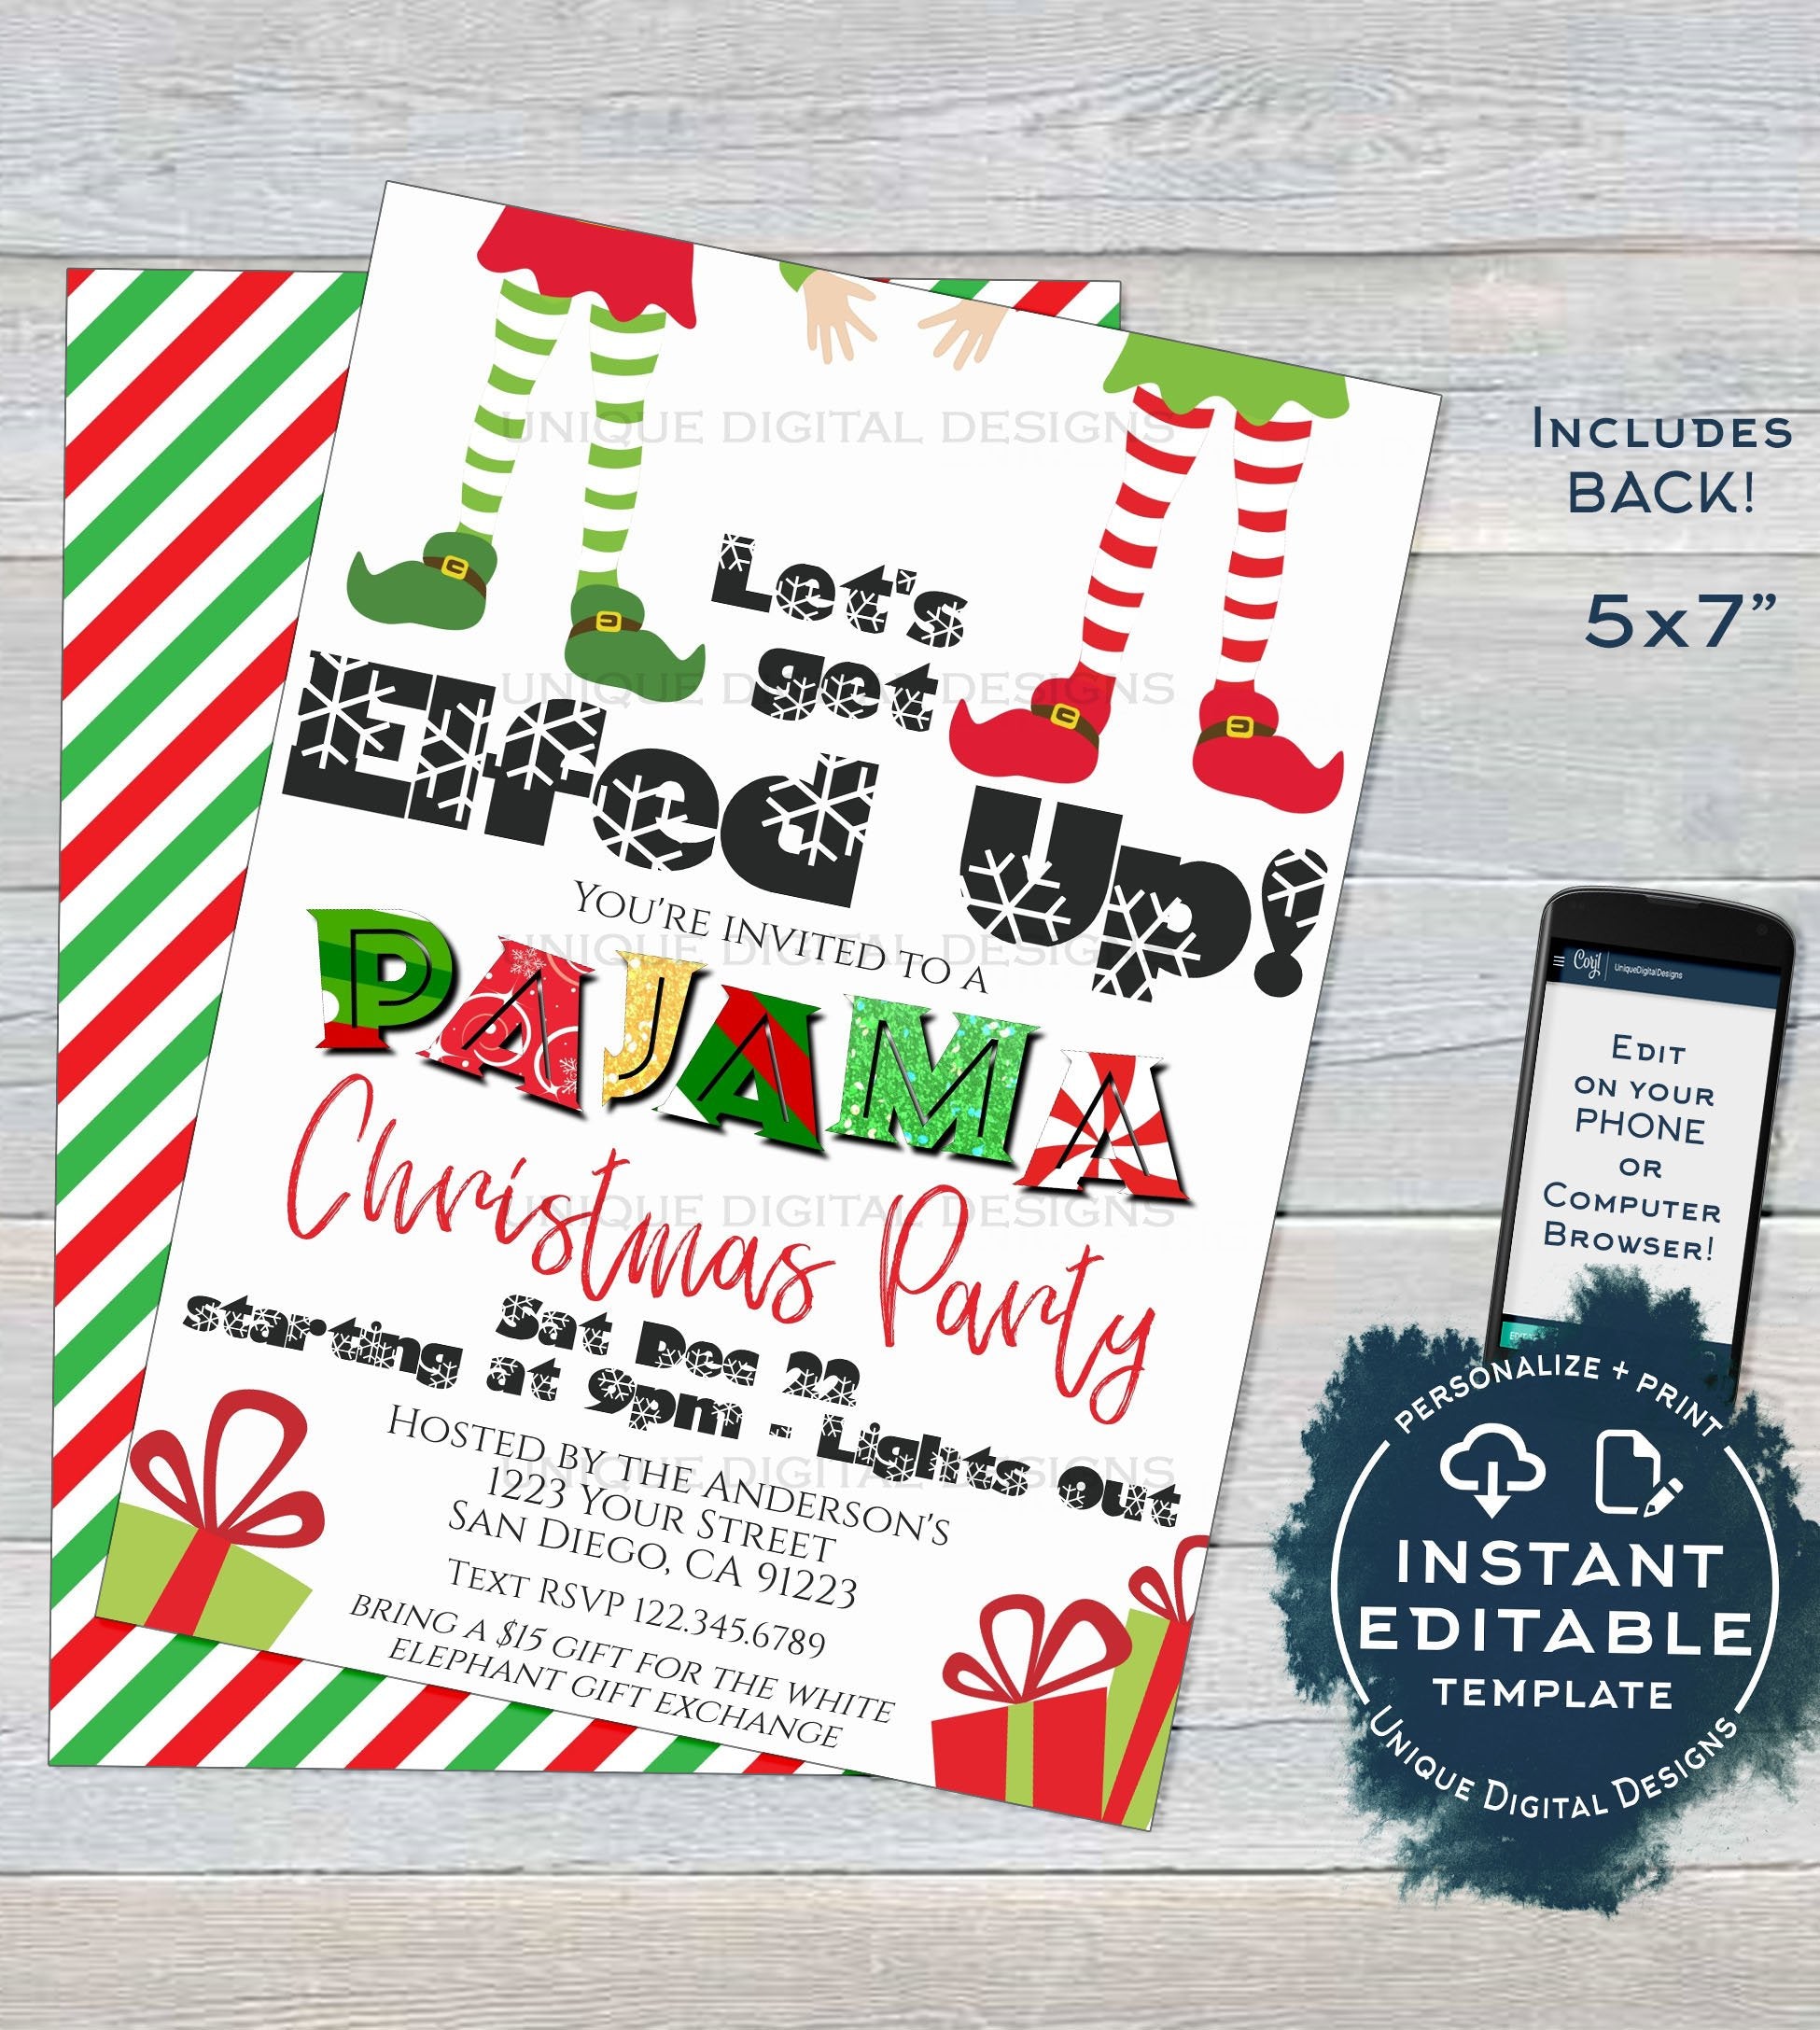 The Ultimate Favorite Things Christmas Pajama Party + FREE Printables